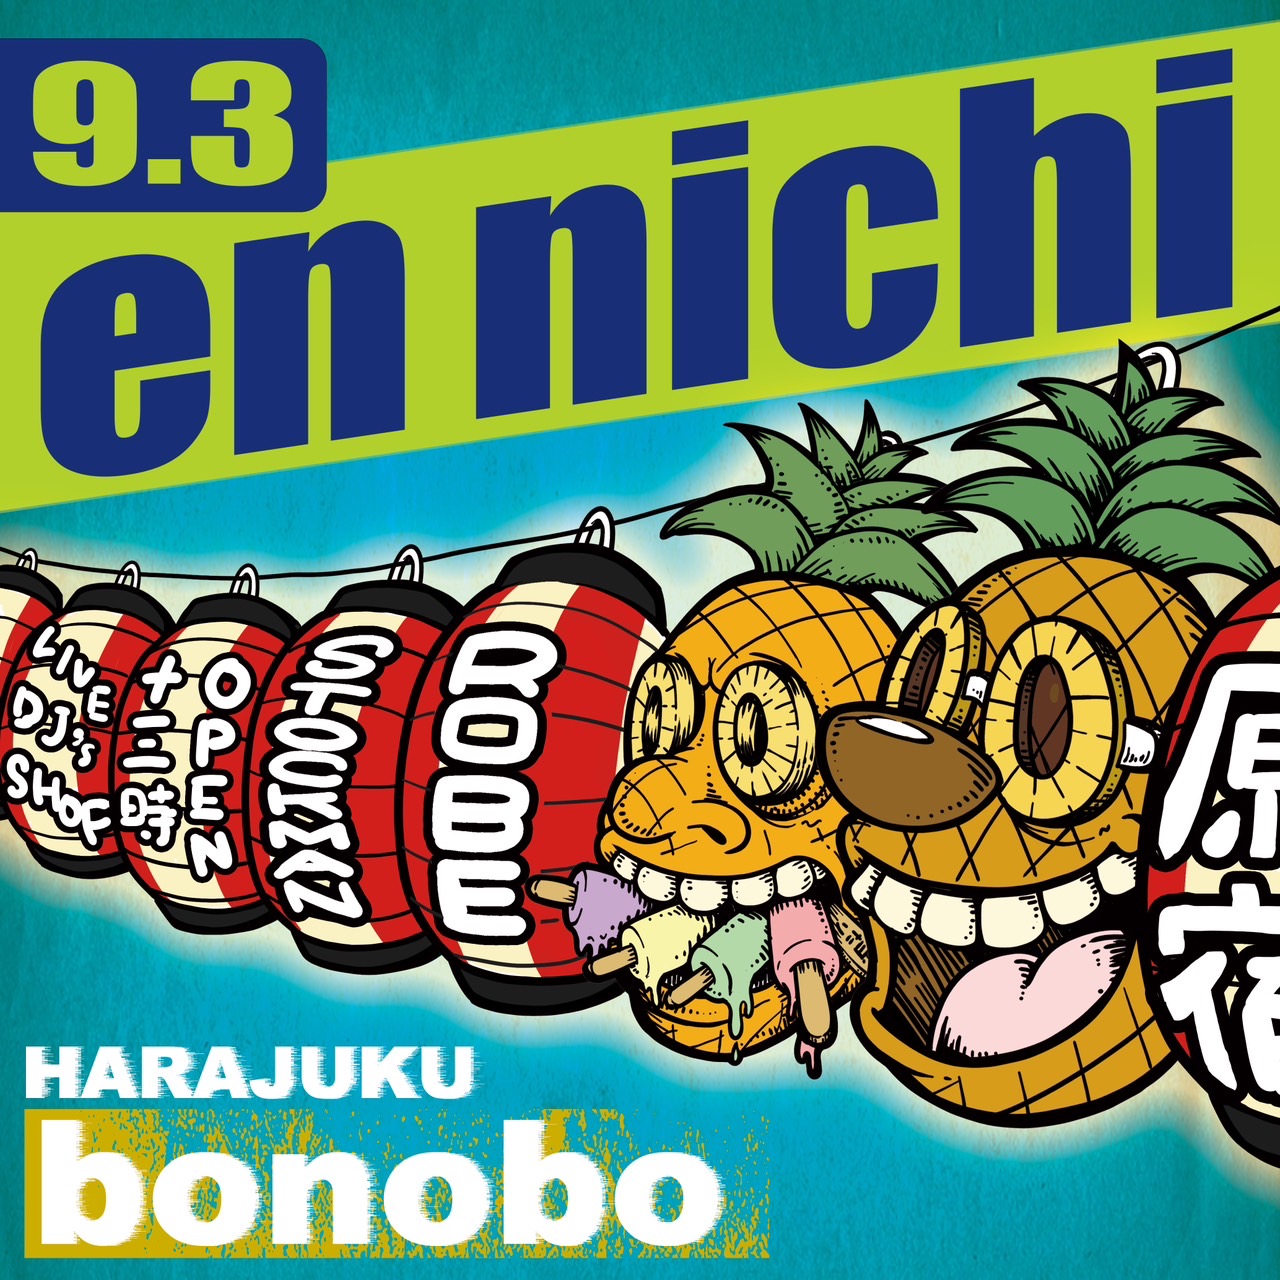 9/3(Sun) at 原宿 bar bonobo  STOCKMAN & ROBE JAPONICA Presents 「en nichi」